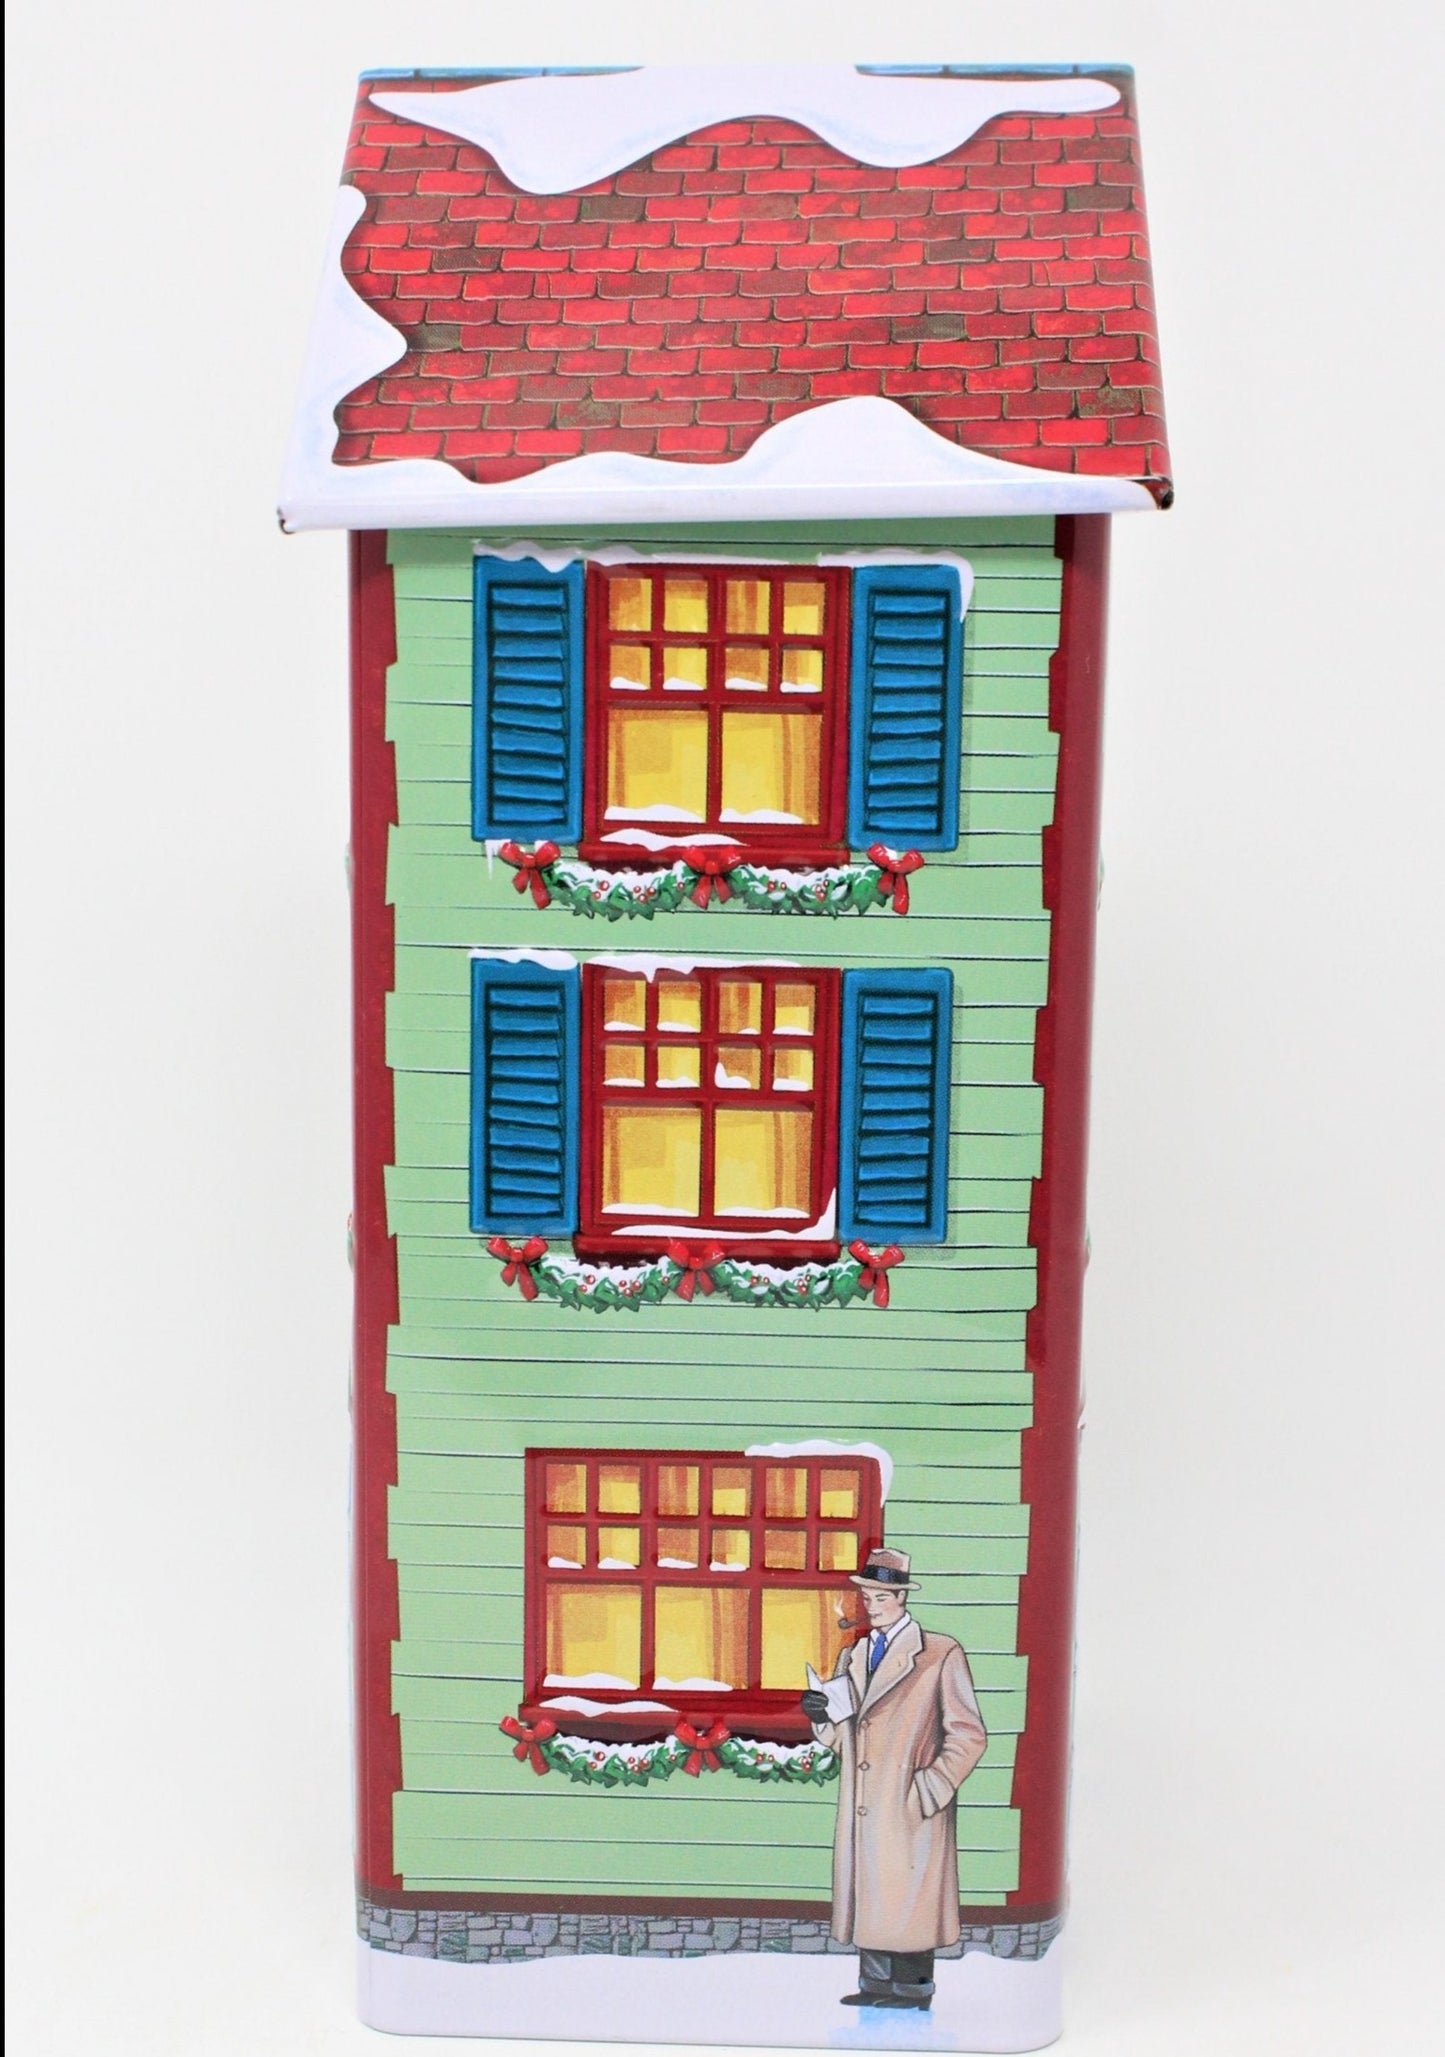 Gift Tin / Cookie Tin, Harry London, Christmas Village Tin Collection, 2014